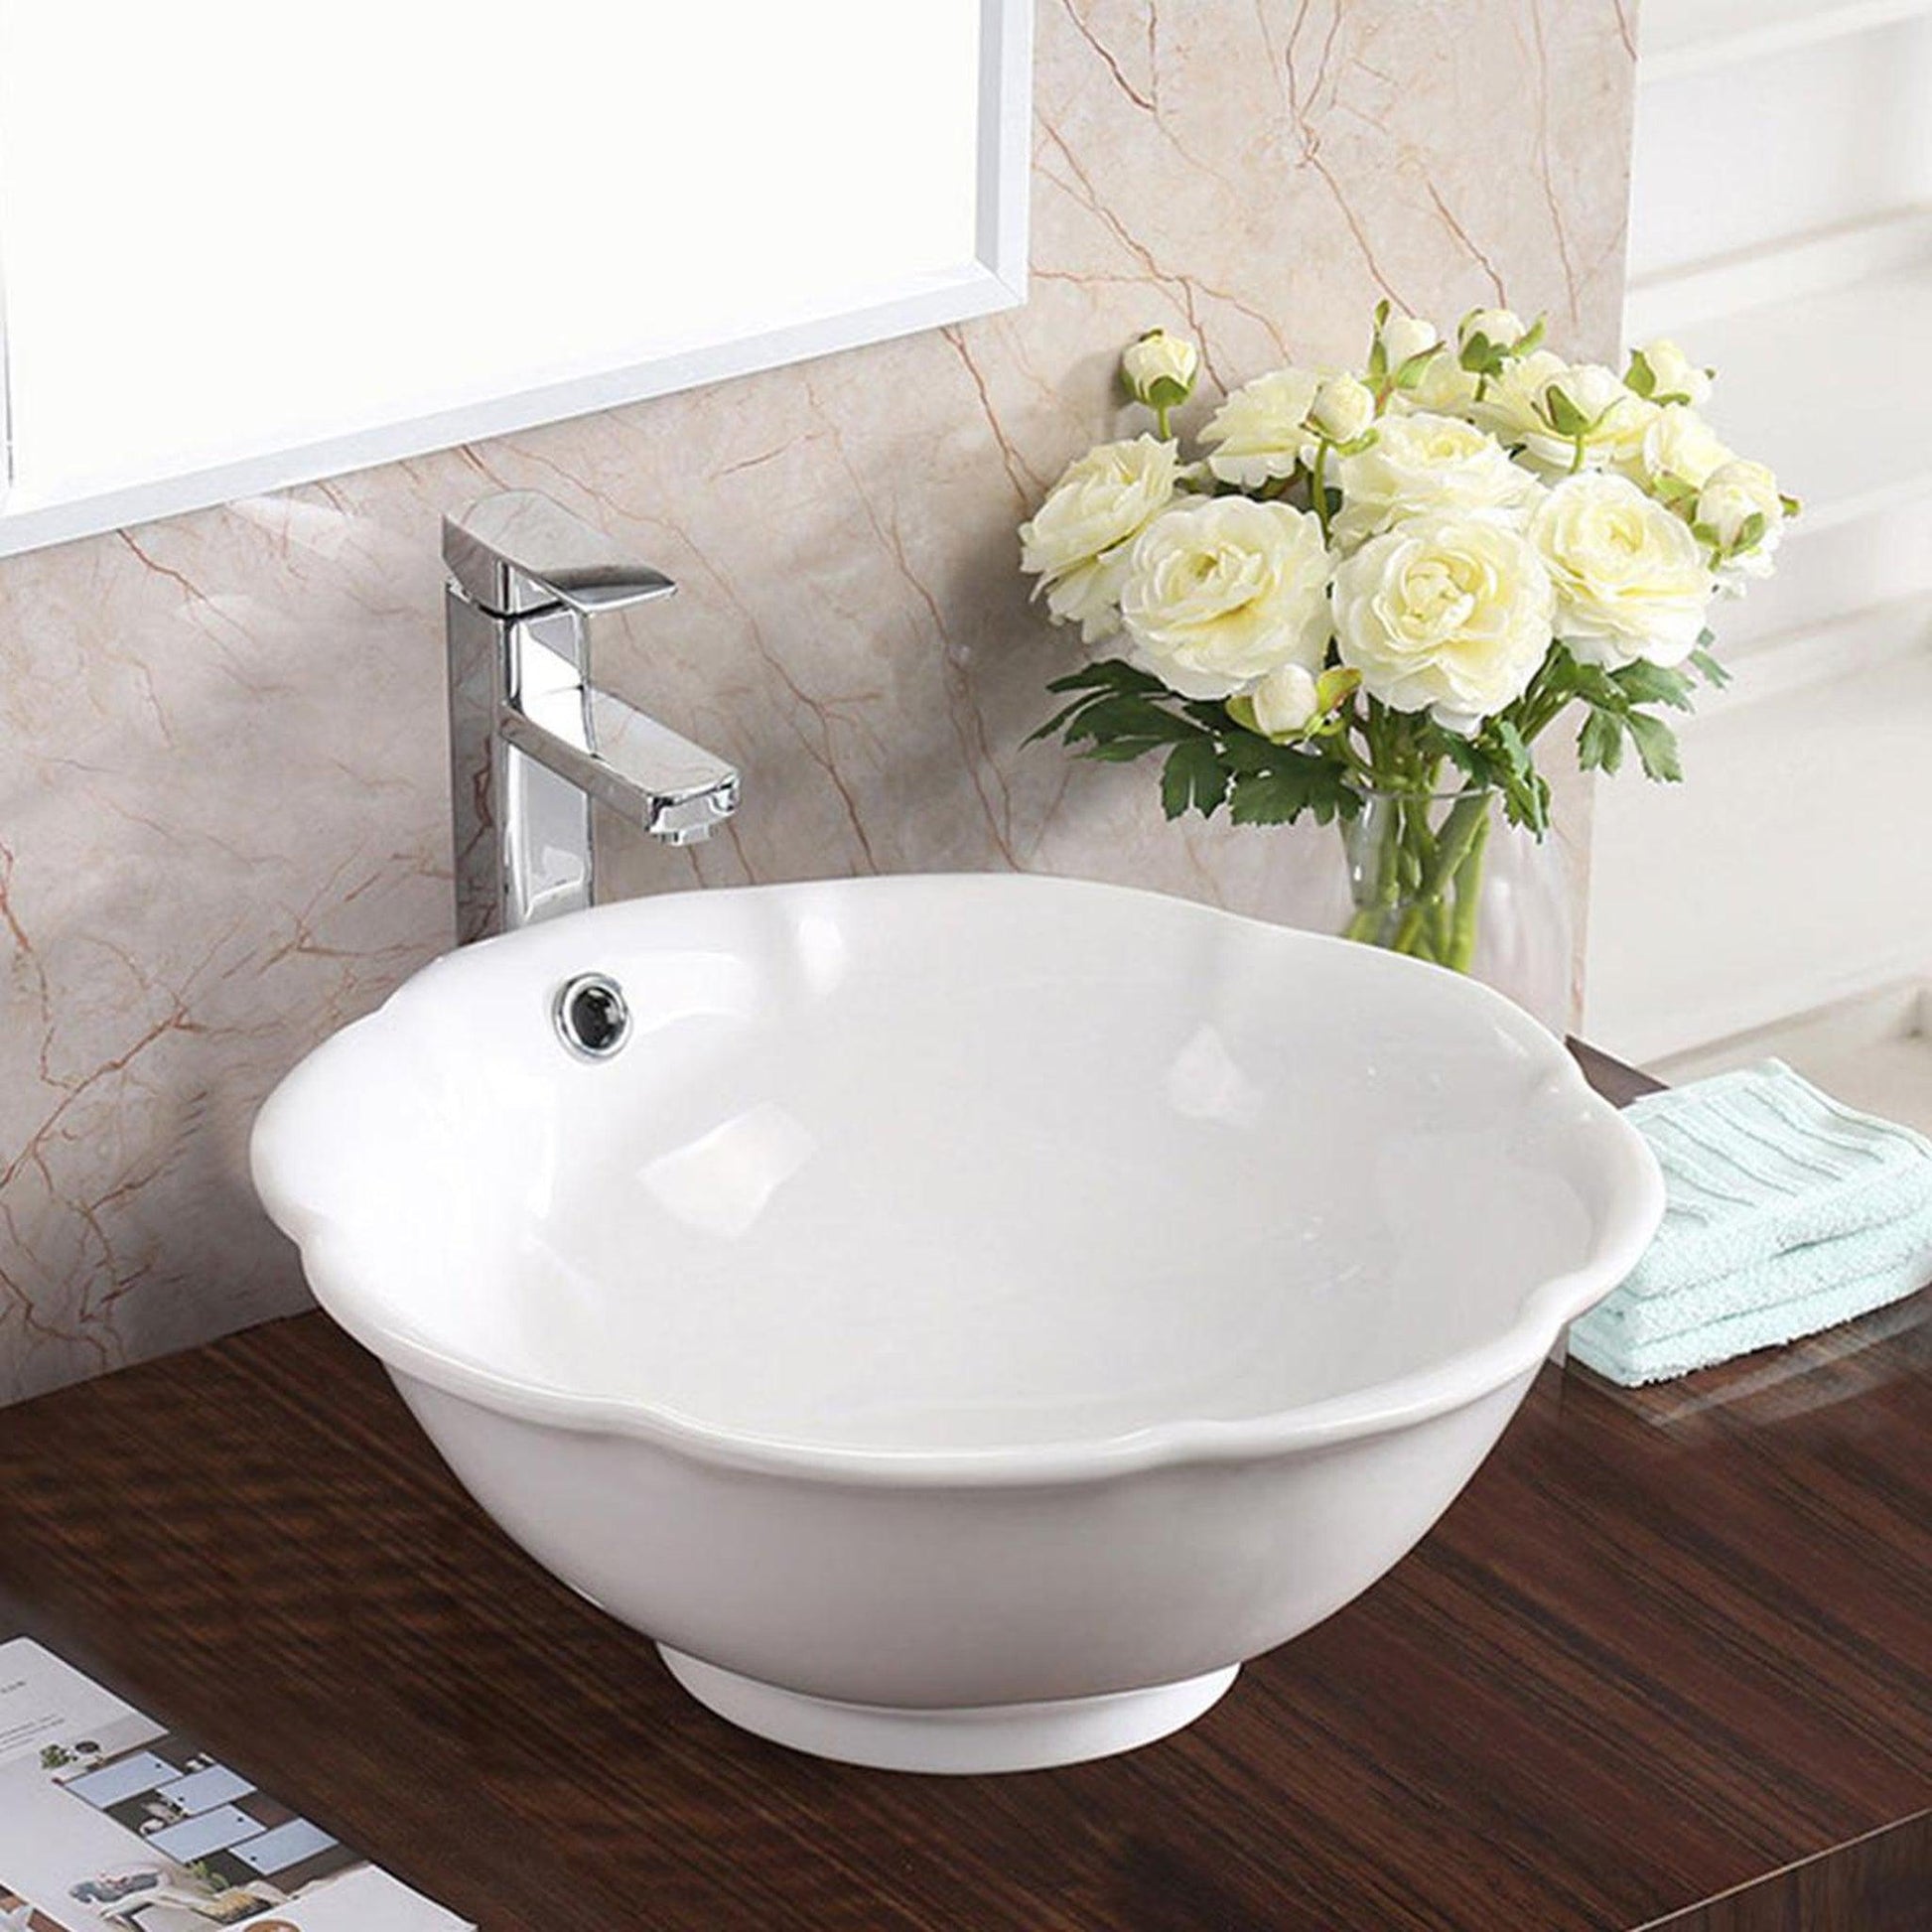 Pelican Int’l Shell Series PL-3053 17"x17" White Porcelain Vessel Bathroom Sink